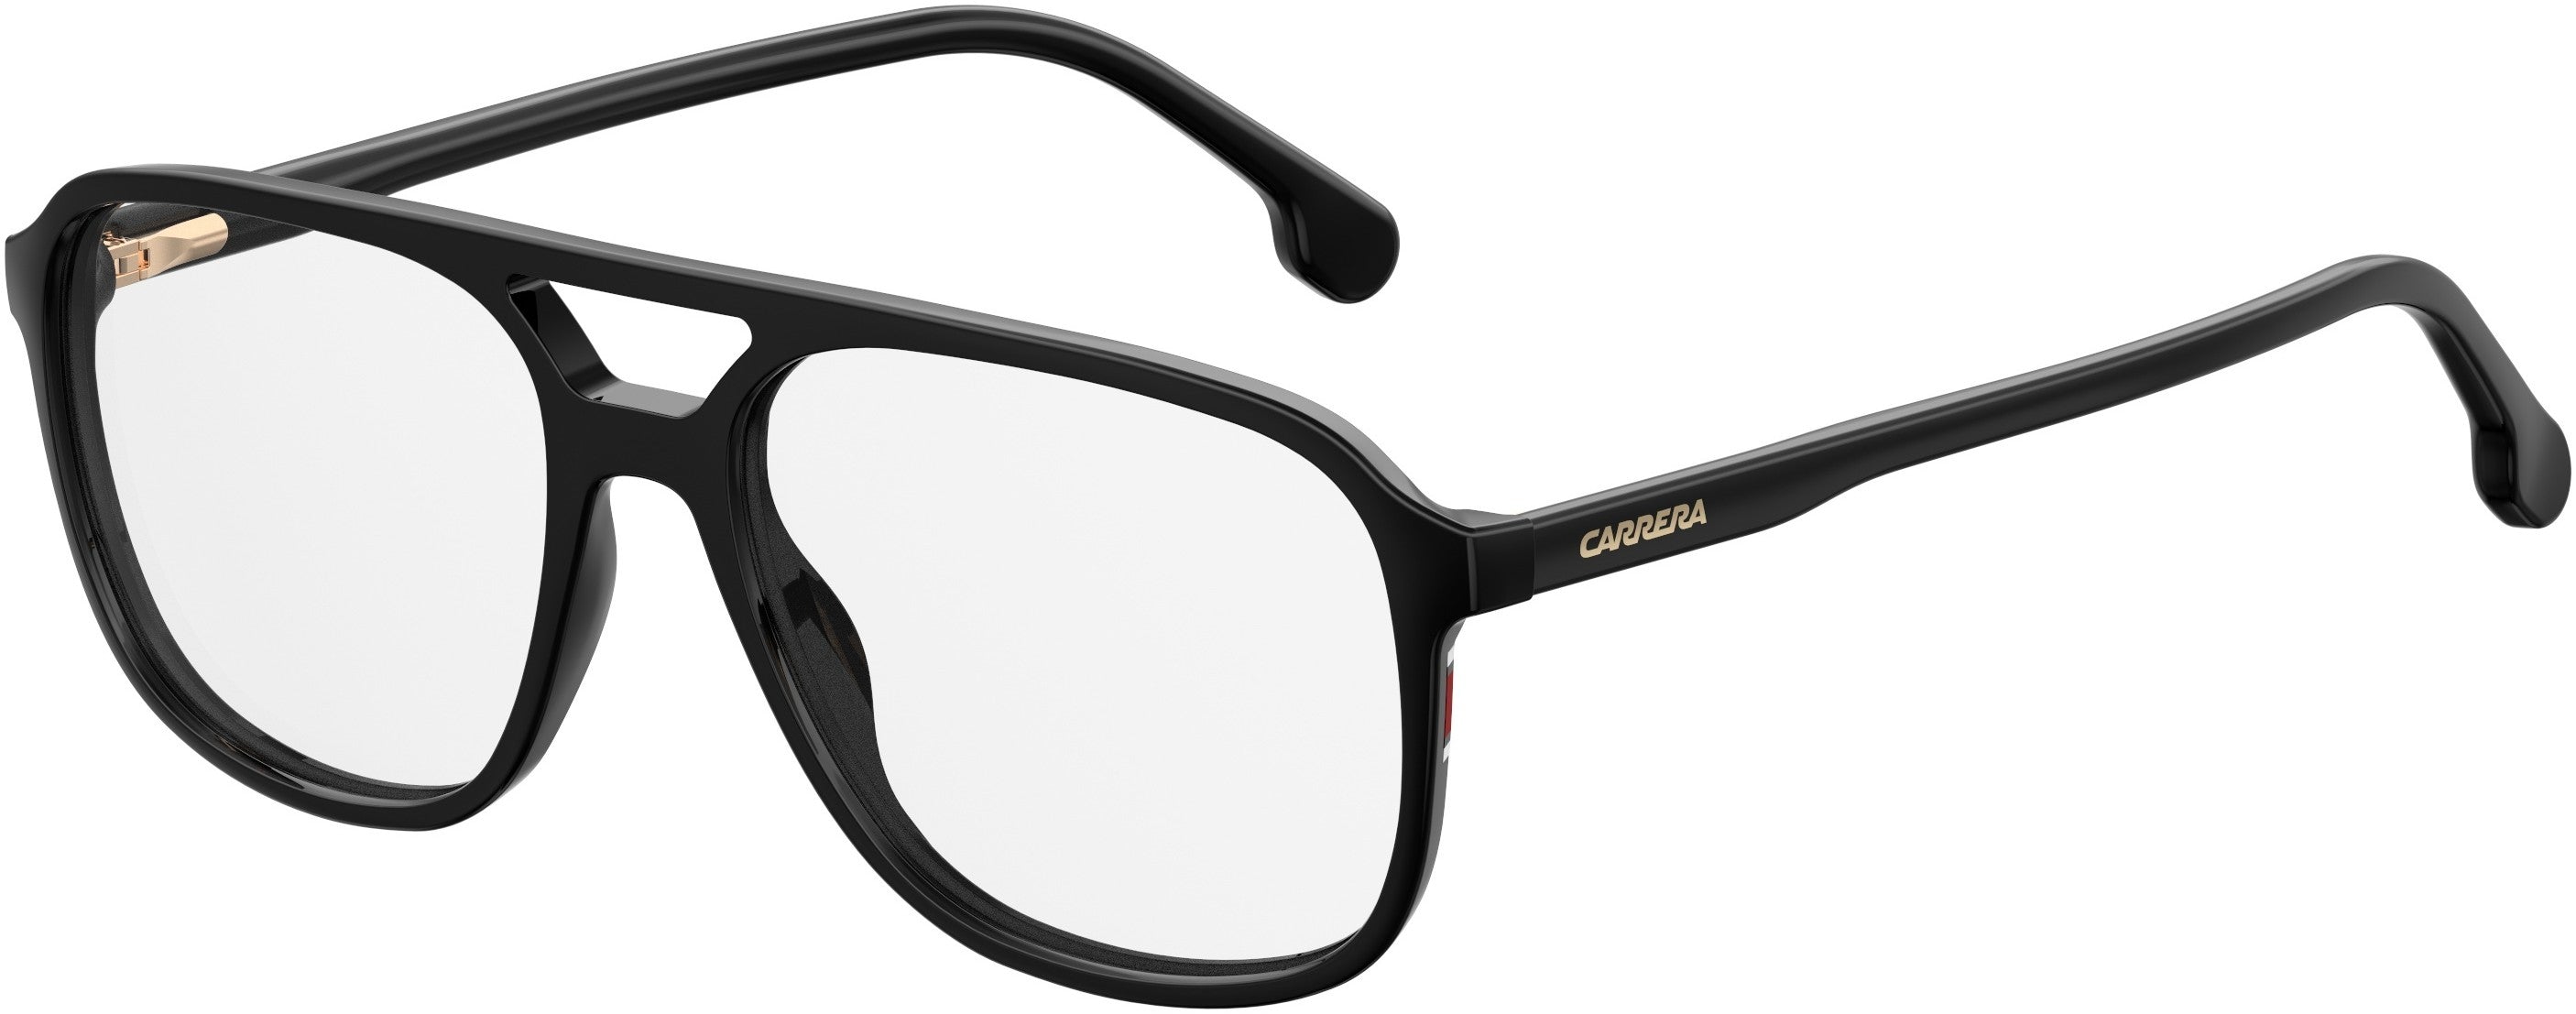  Carrera 176 Rectangular Eyeglasses 0807-0807  Black (00 Demo Lens)